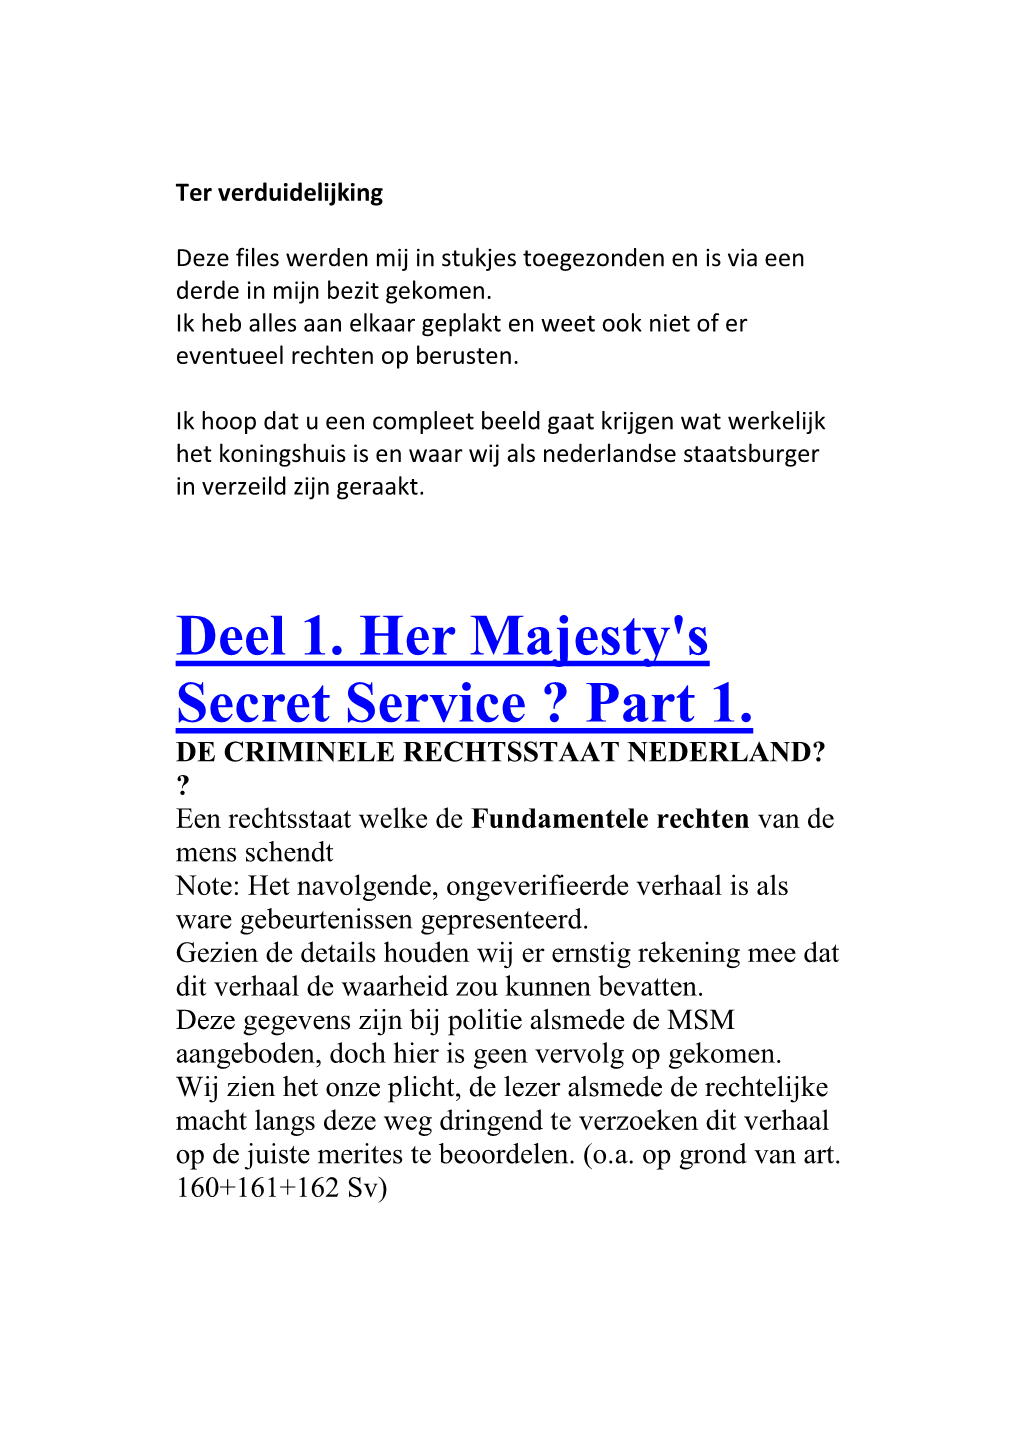 Deel 1. Her Majesty's Secret Service ? Part 1